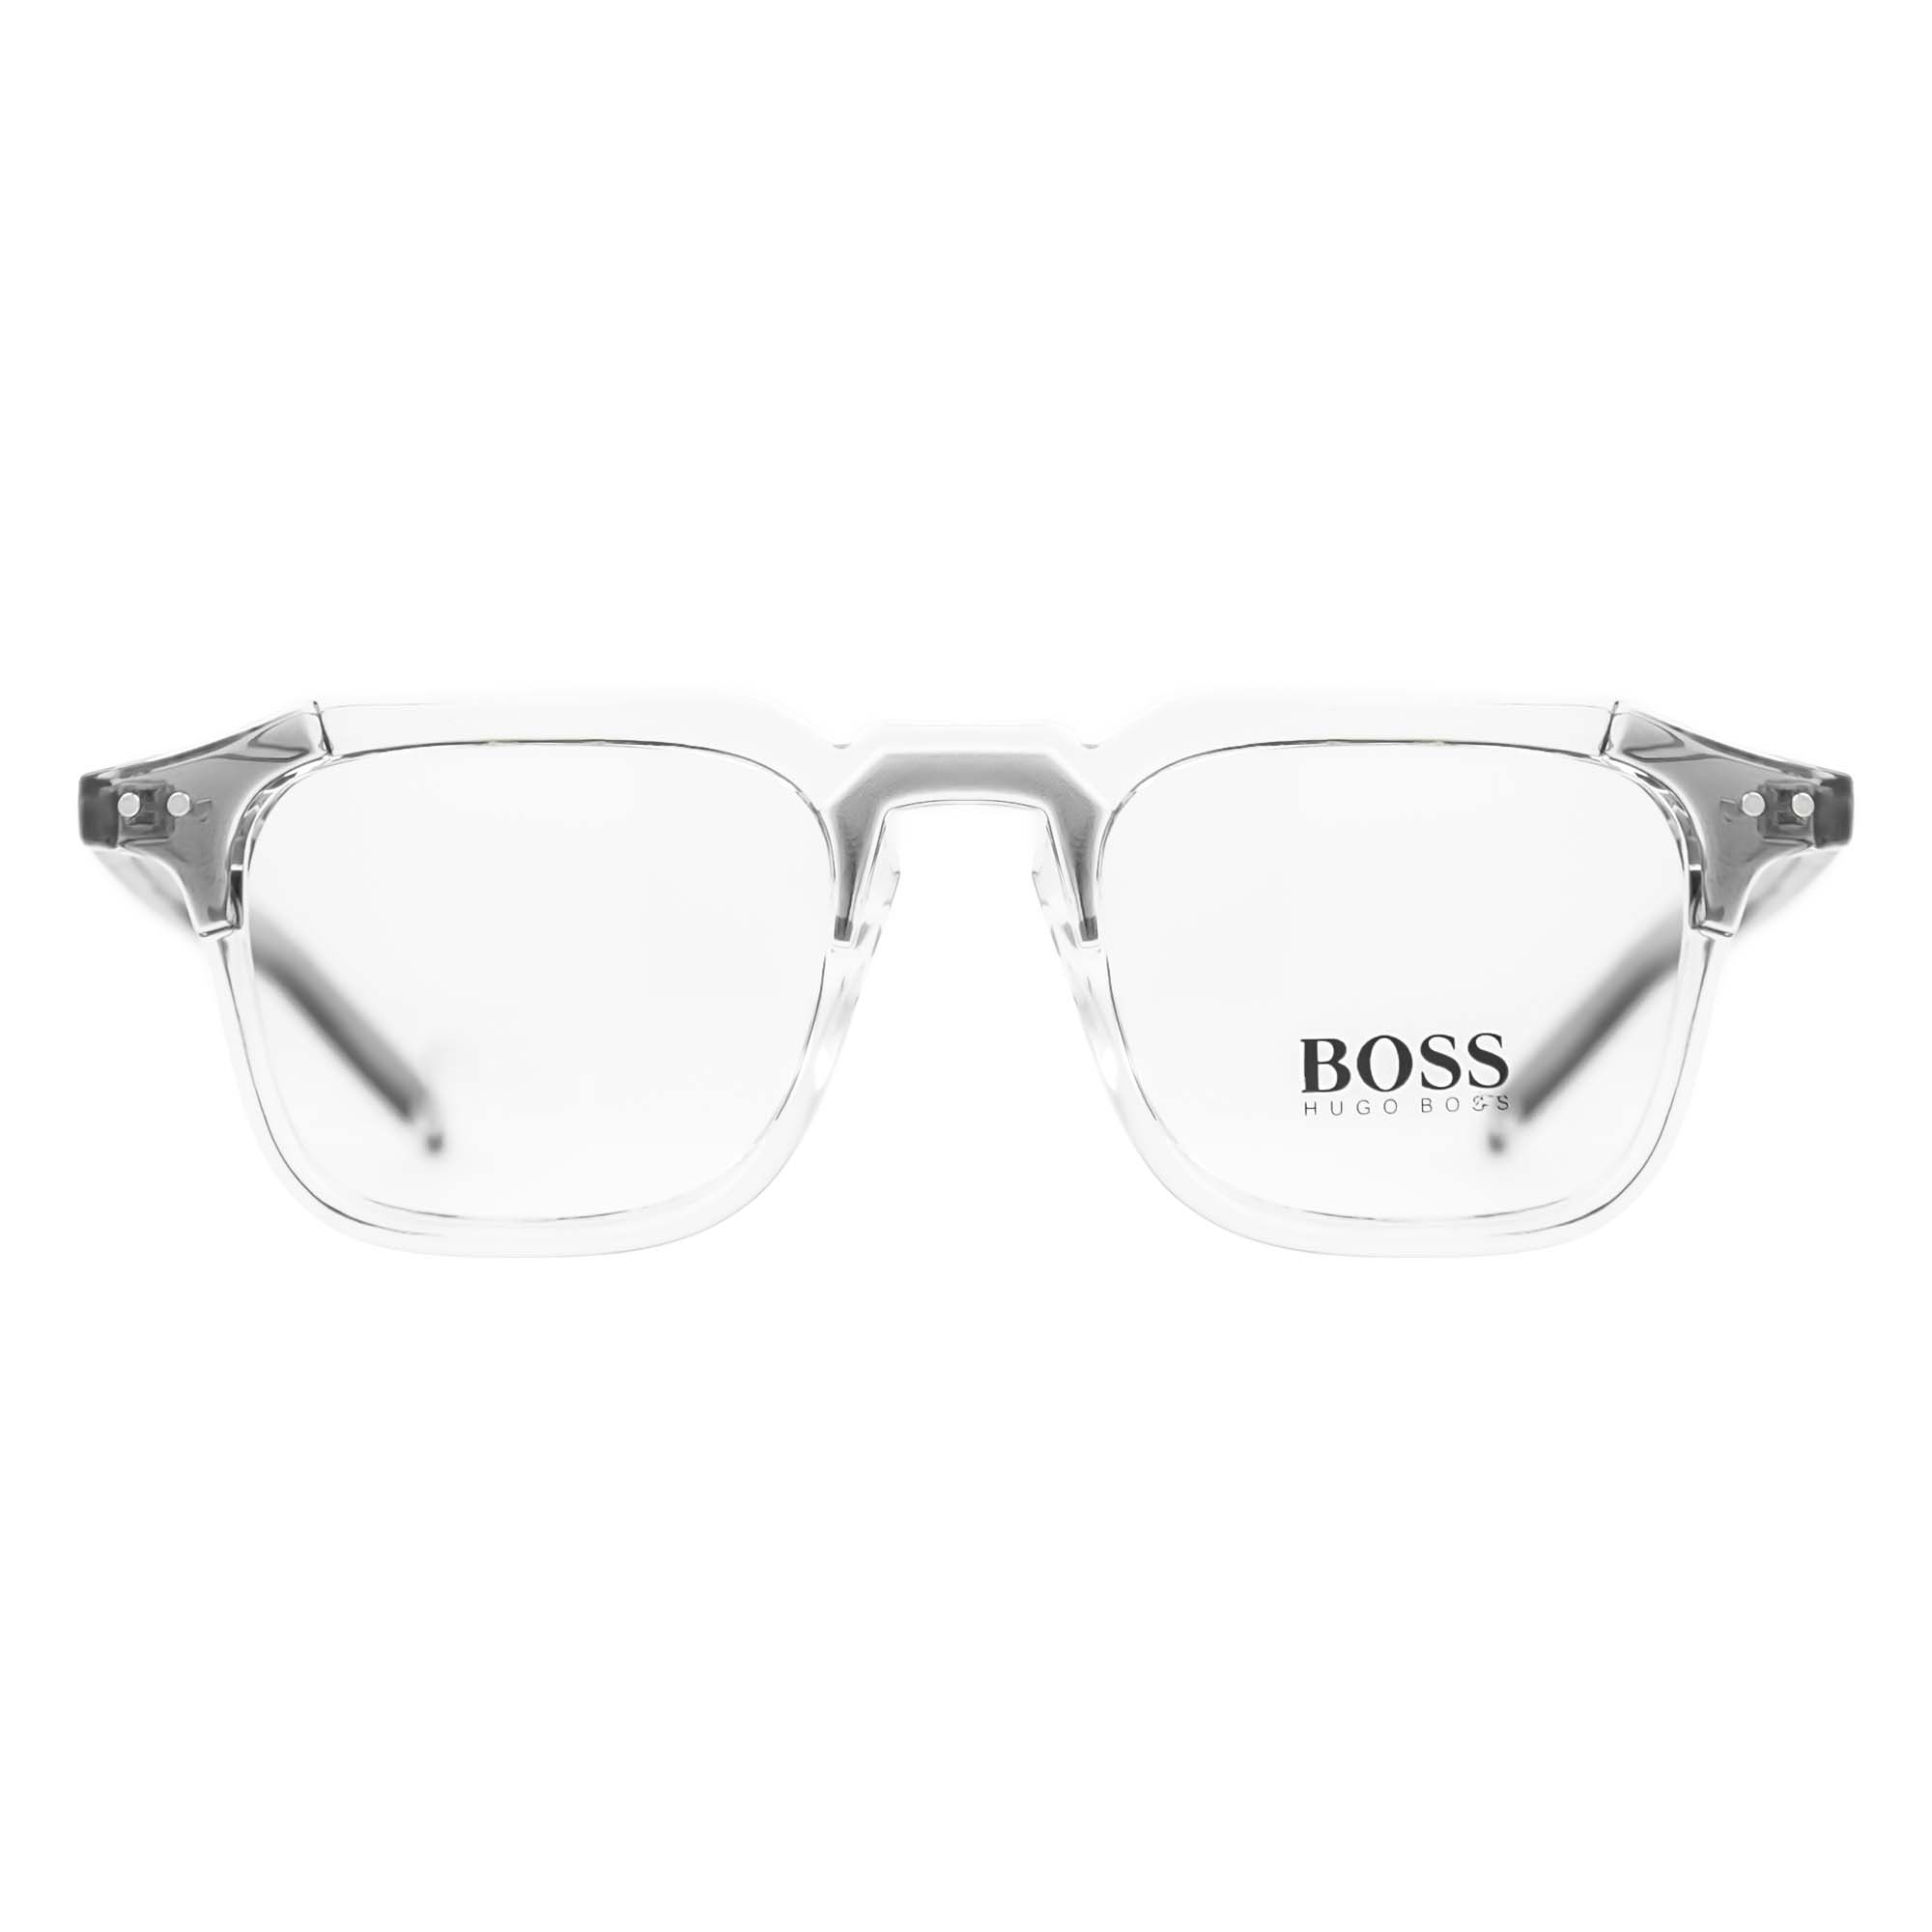 Boss 01 (Screen Glasses)